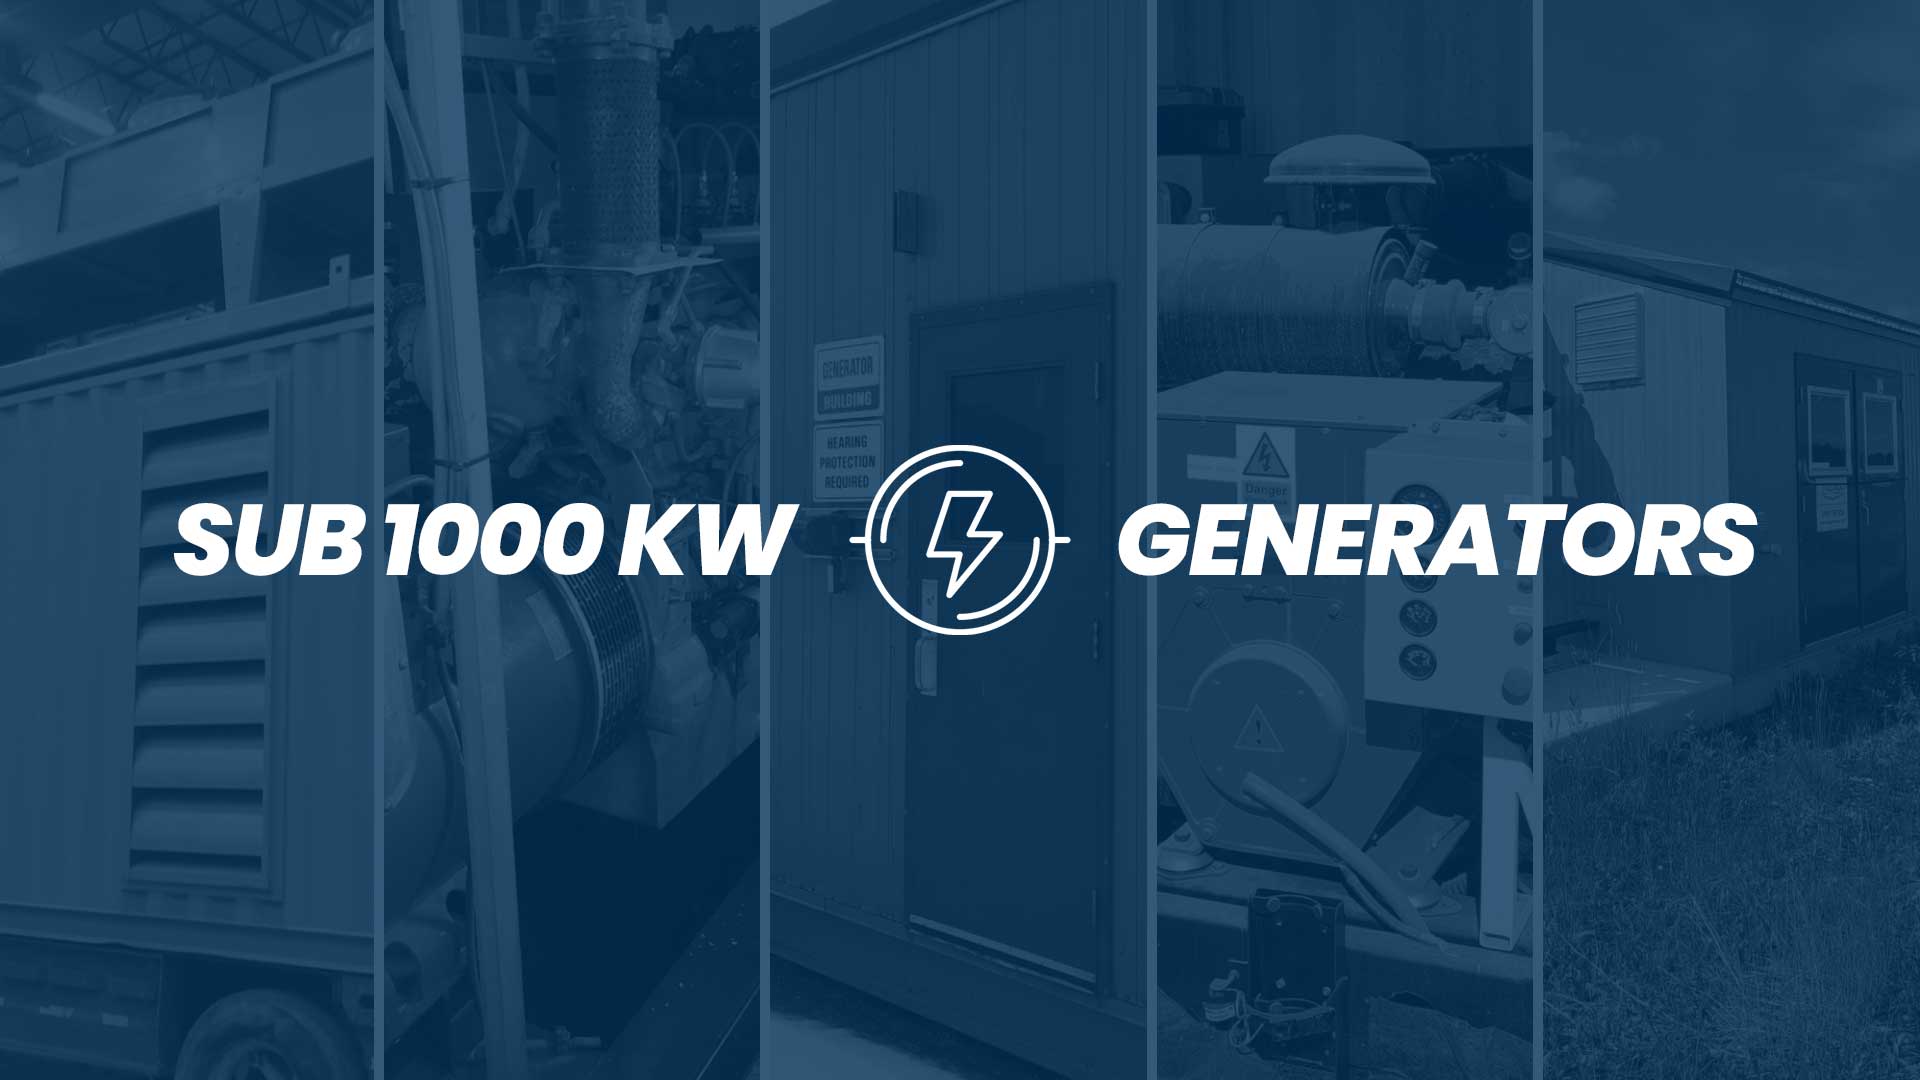 5 SUB 1000 kW (kilowatt) 1 MW Generators Just Listed! 750 kW / 550 kW / 400 kW / 200 kW / 85 kW Surplus Natural Gas Generators for Sale in Canada